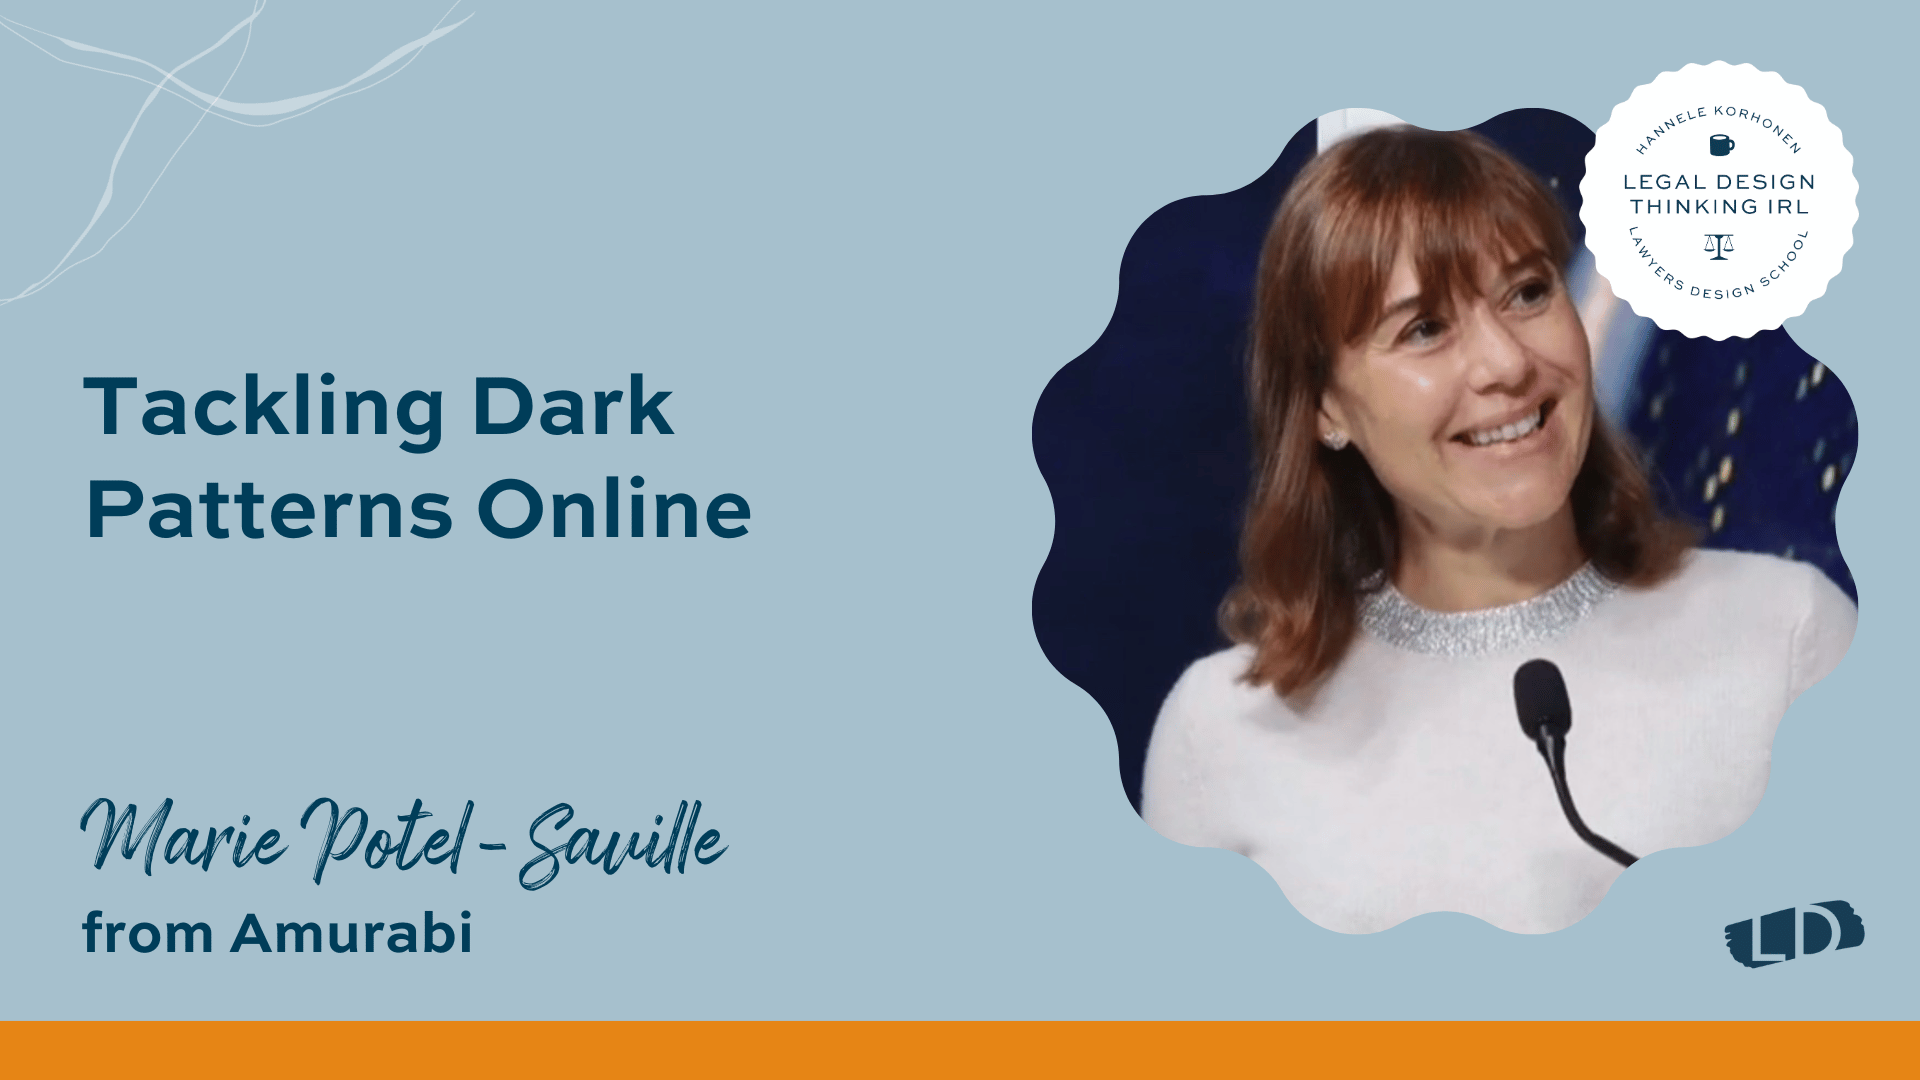 Tackling Dark Patterns Online with Legal Design - Marie Potel-Saville